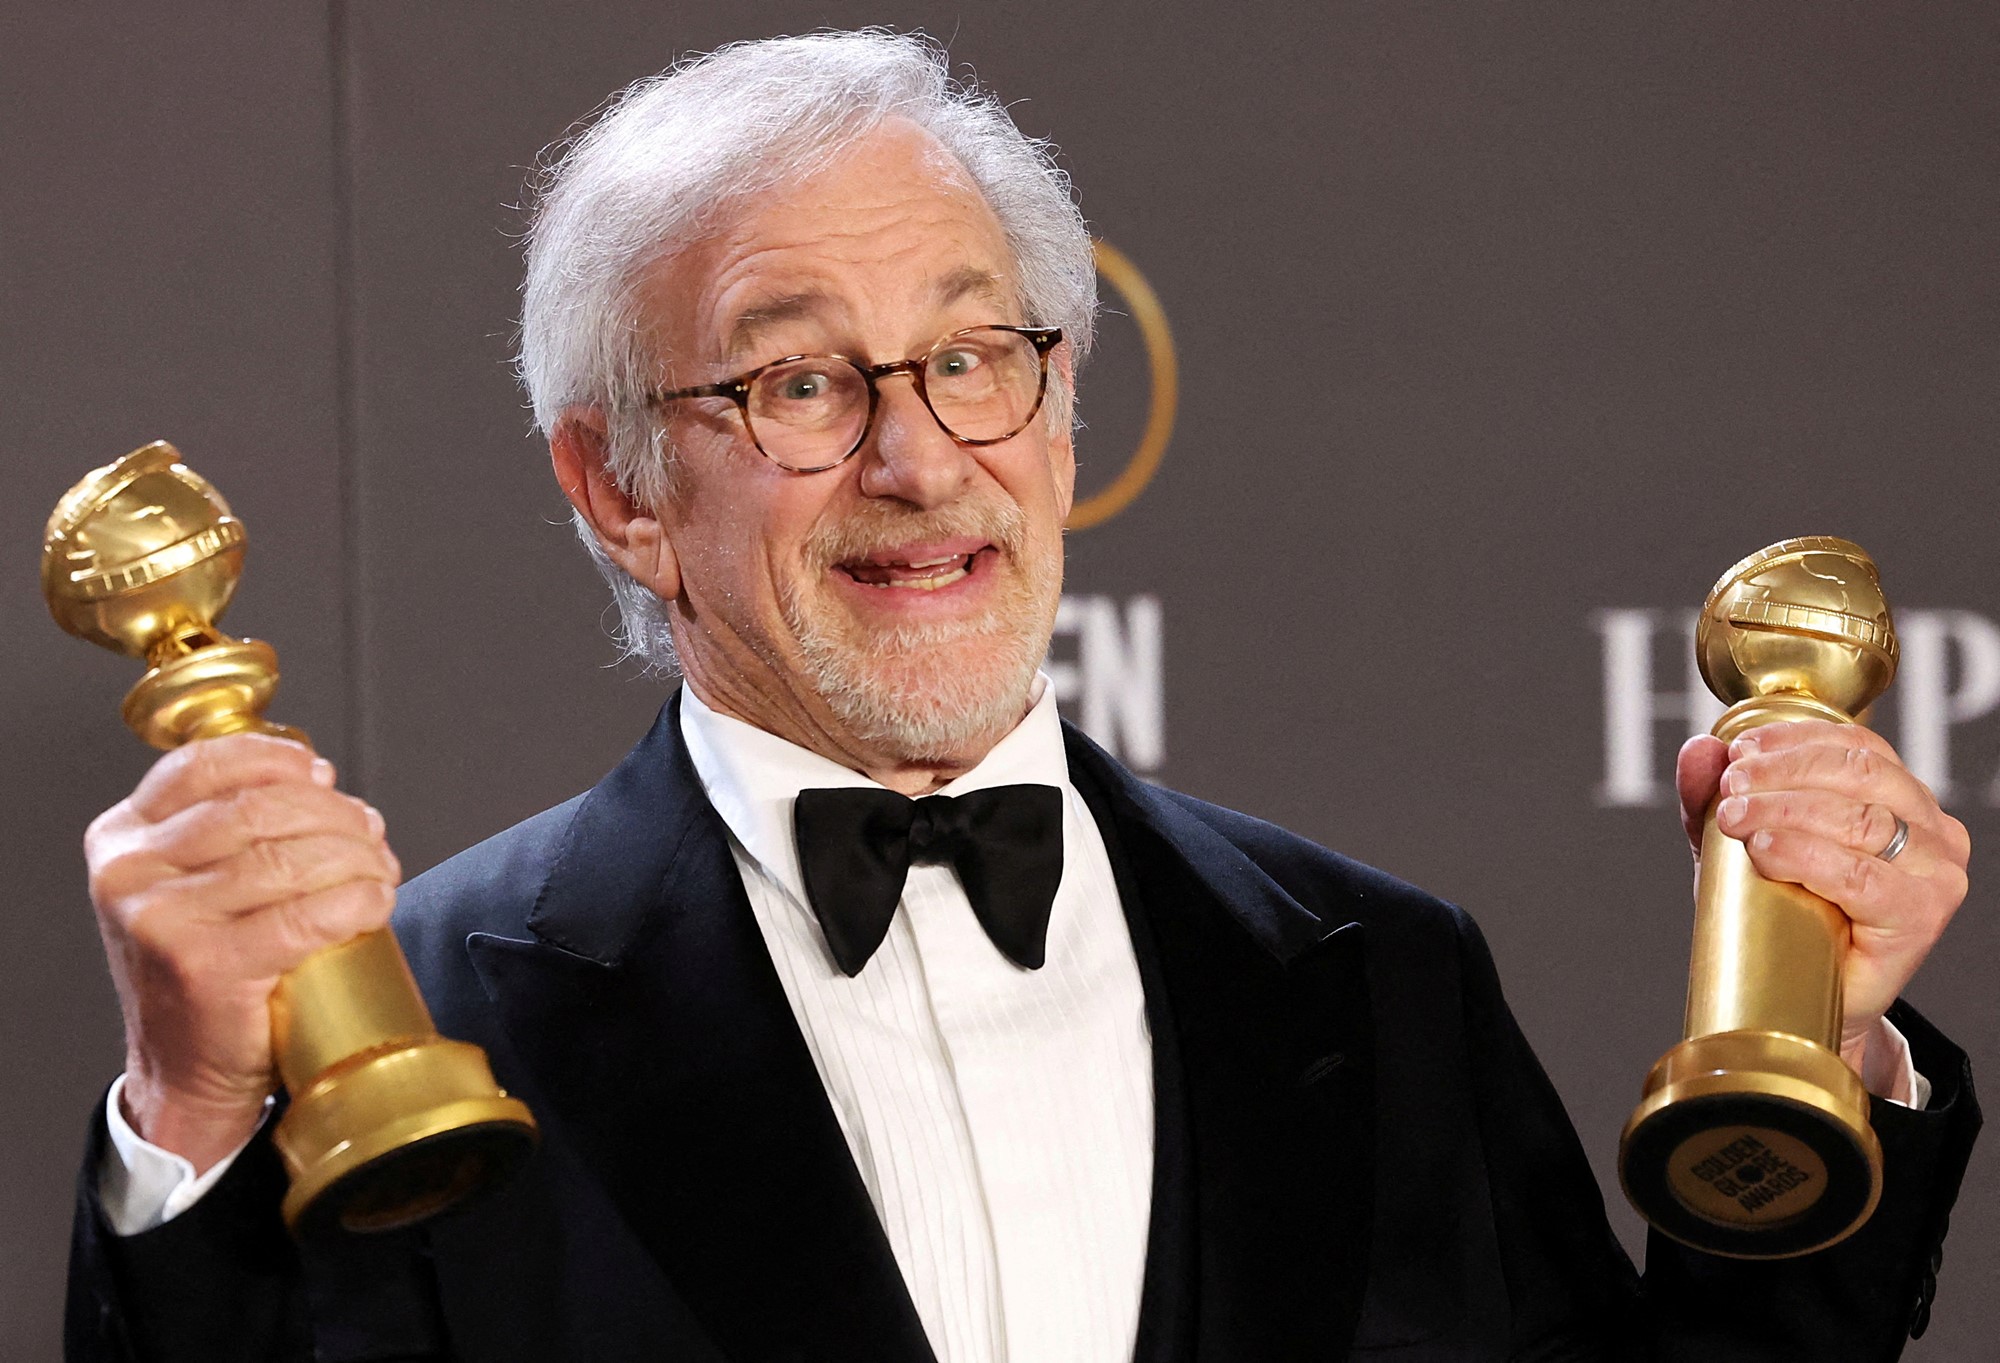 Steven Spielberg holds up two Golden Globes